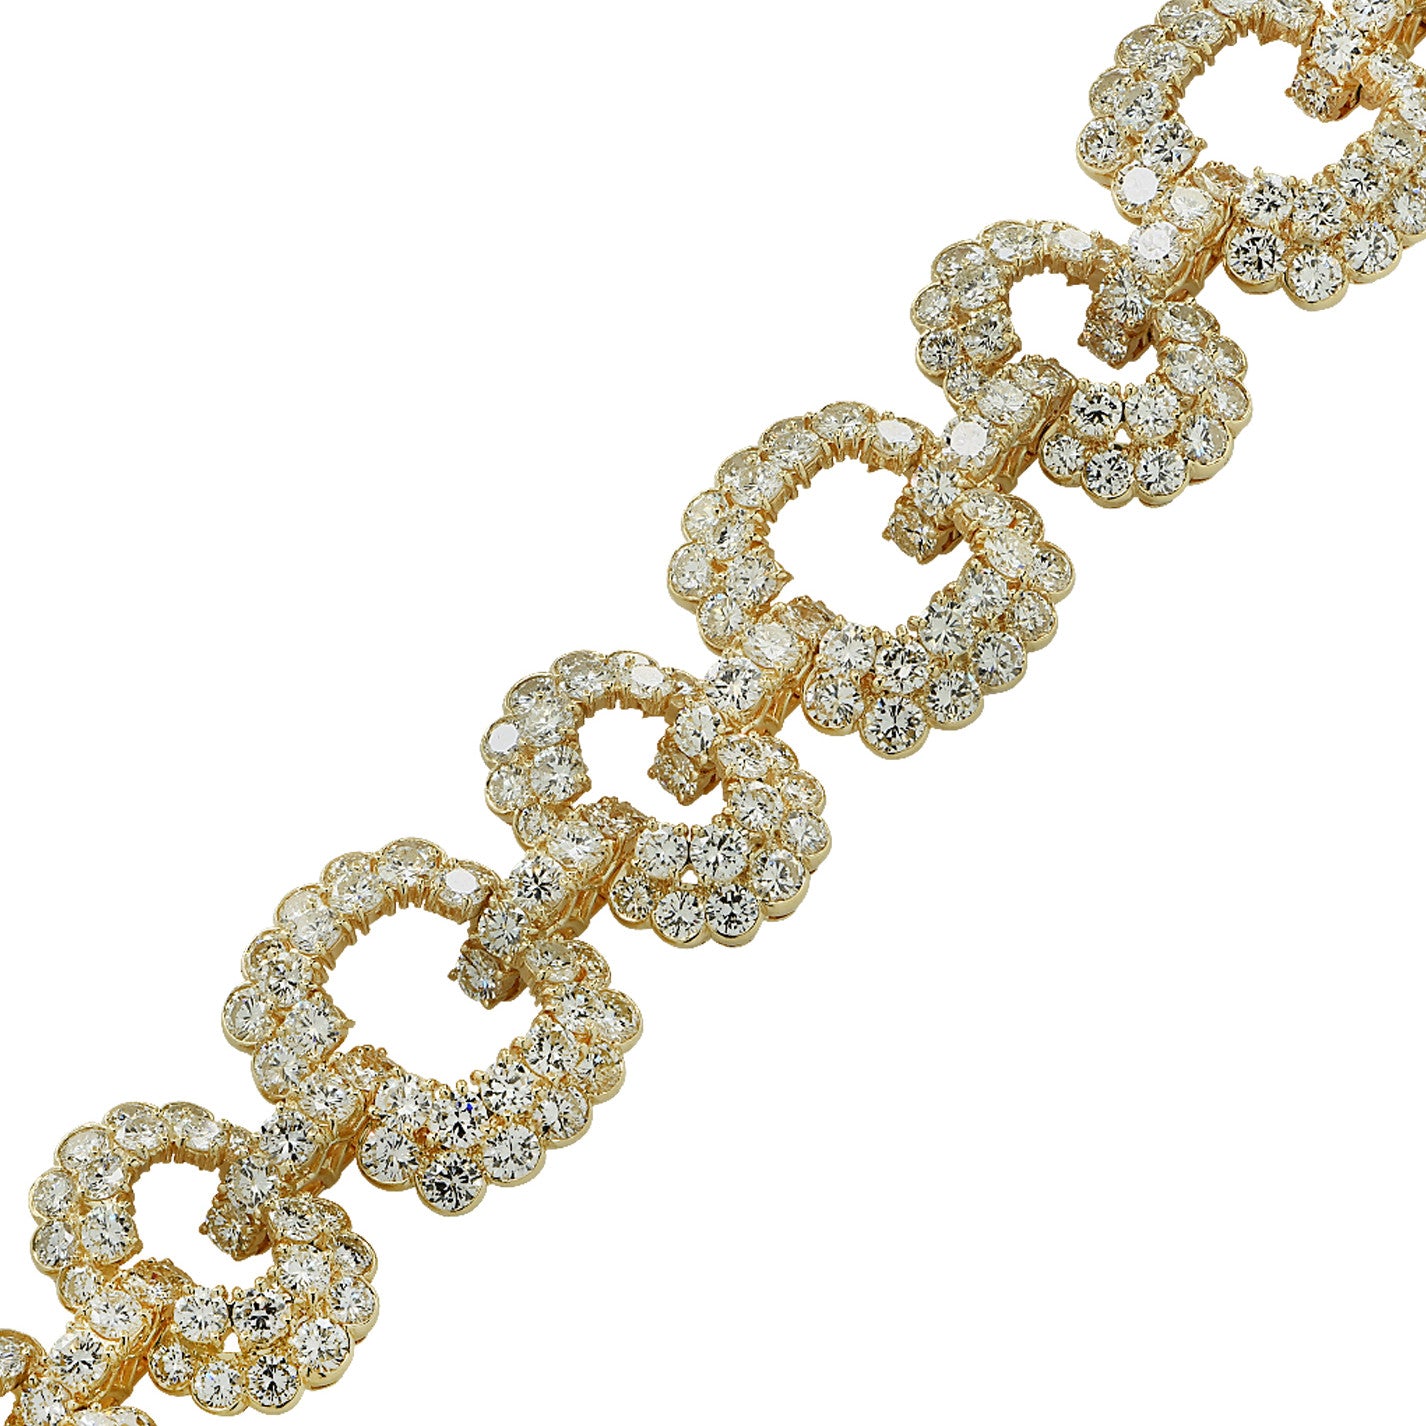 Van Cleef & Arpels 1970s 18KT Yellow Gold Diamond Bracelet laid out front view close-up details